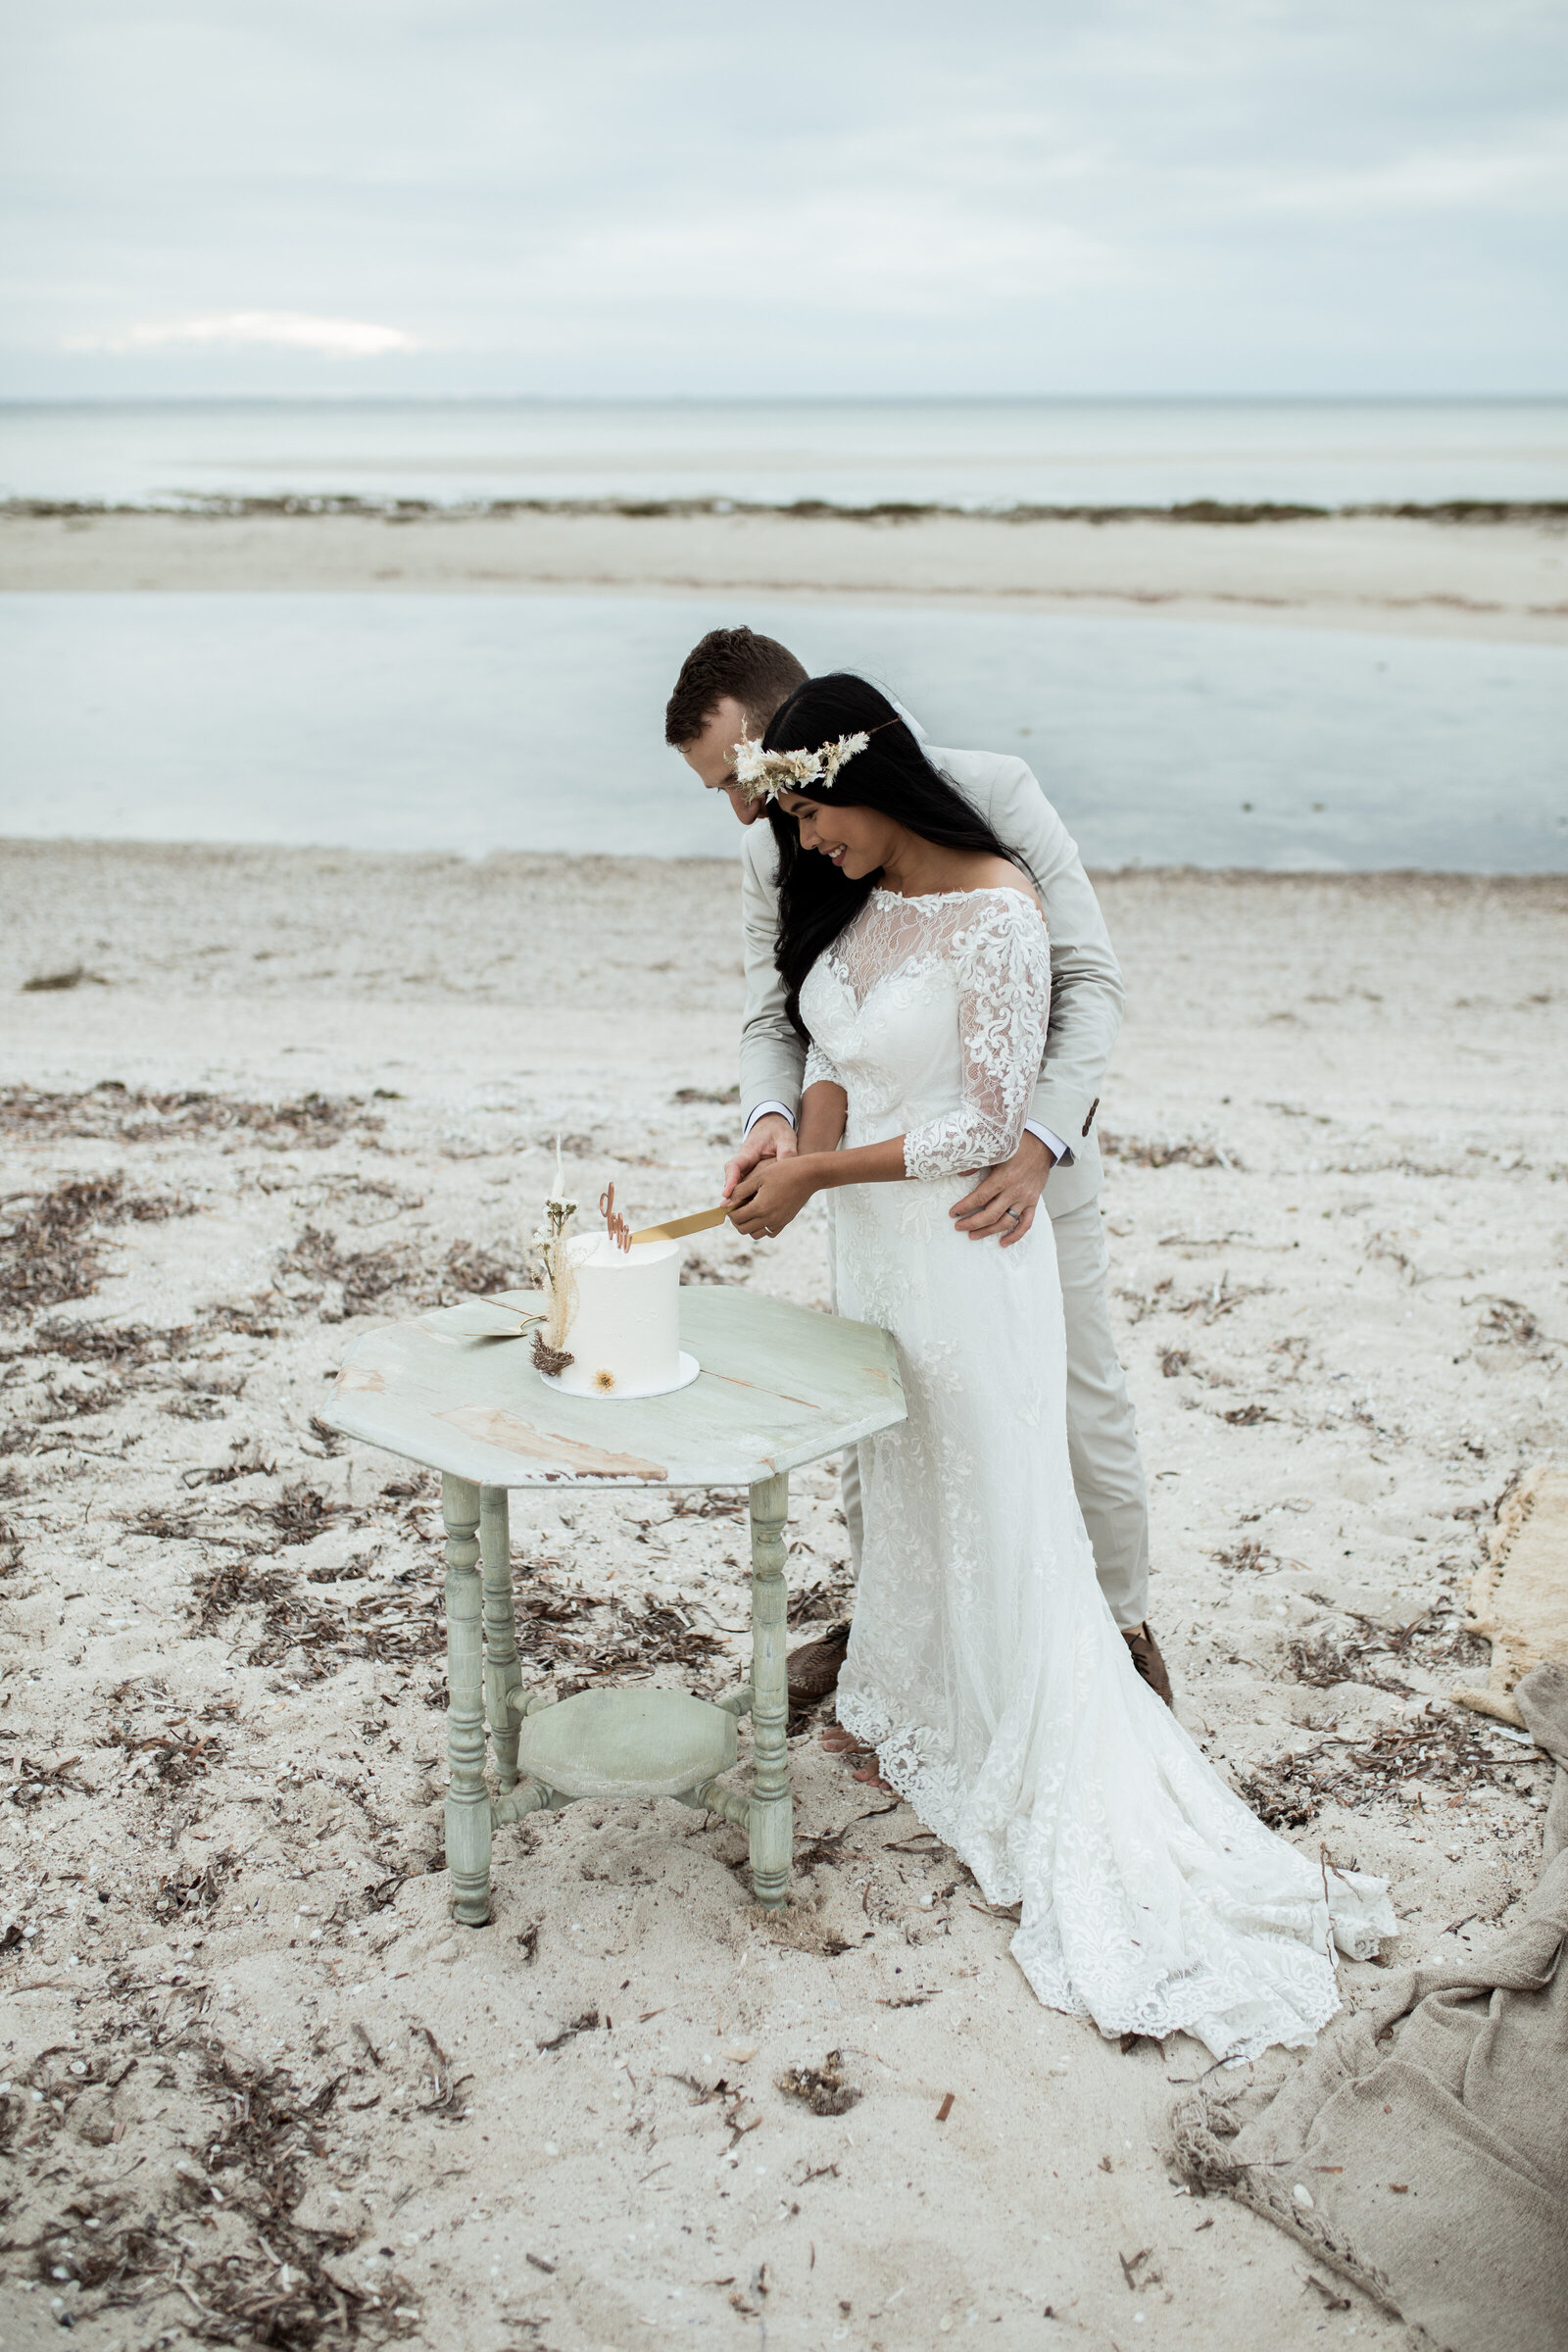 Methona-Sebastian-Rexvil-Photography-Adelaide-Wedding-Photographer-334